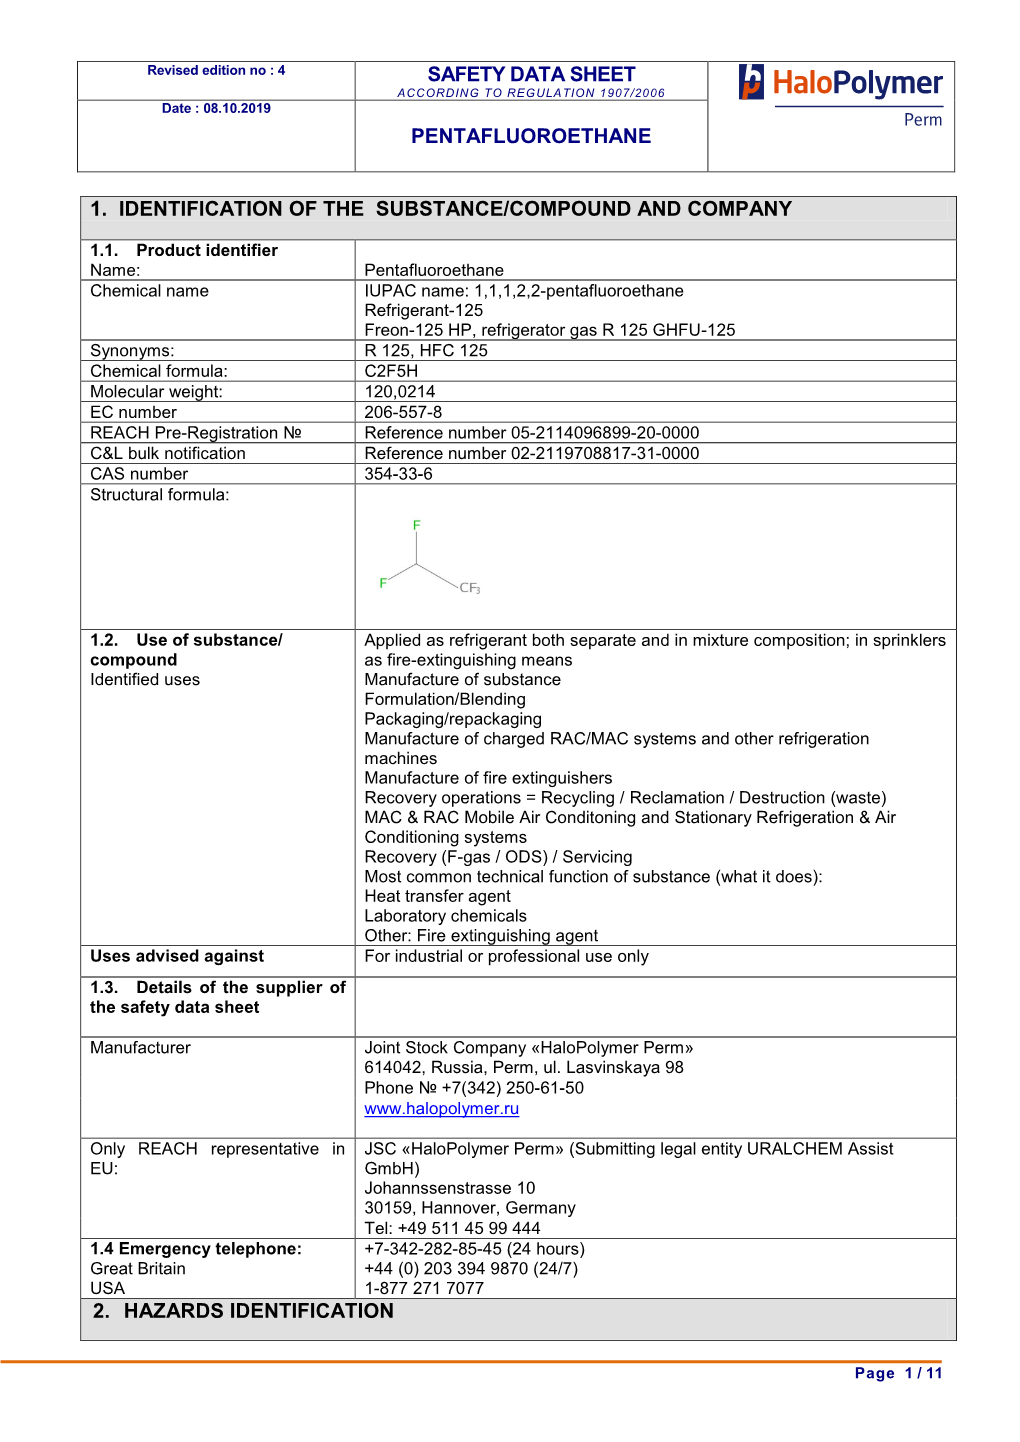 Safety Data Sheet Pentafluoroethane 1. Identification of the Substance/Compound and Company 2. Hazards Identification